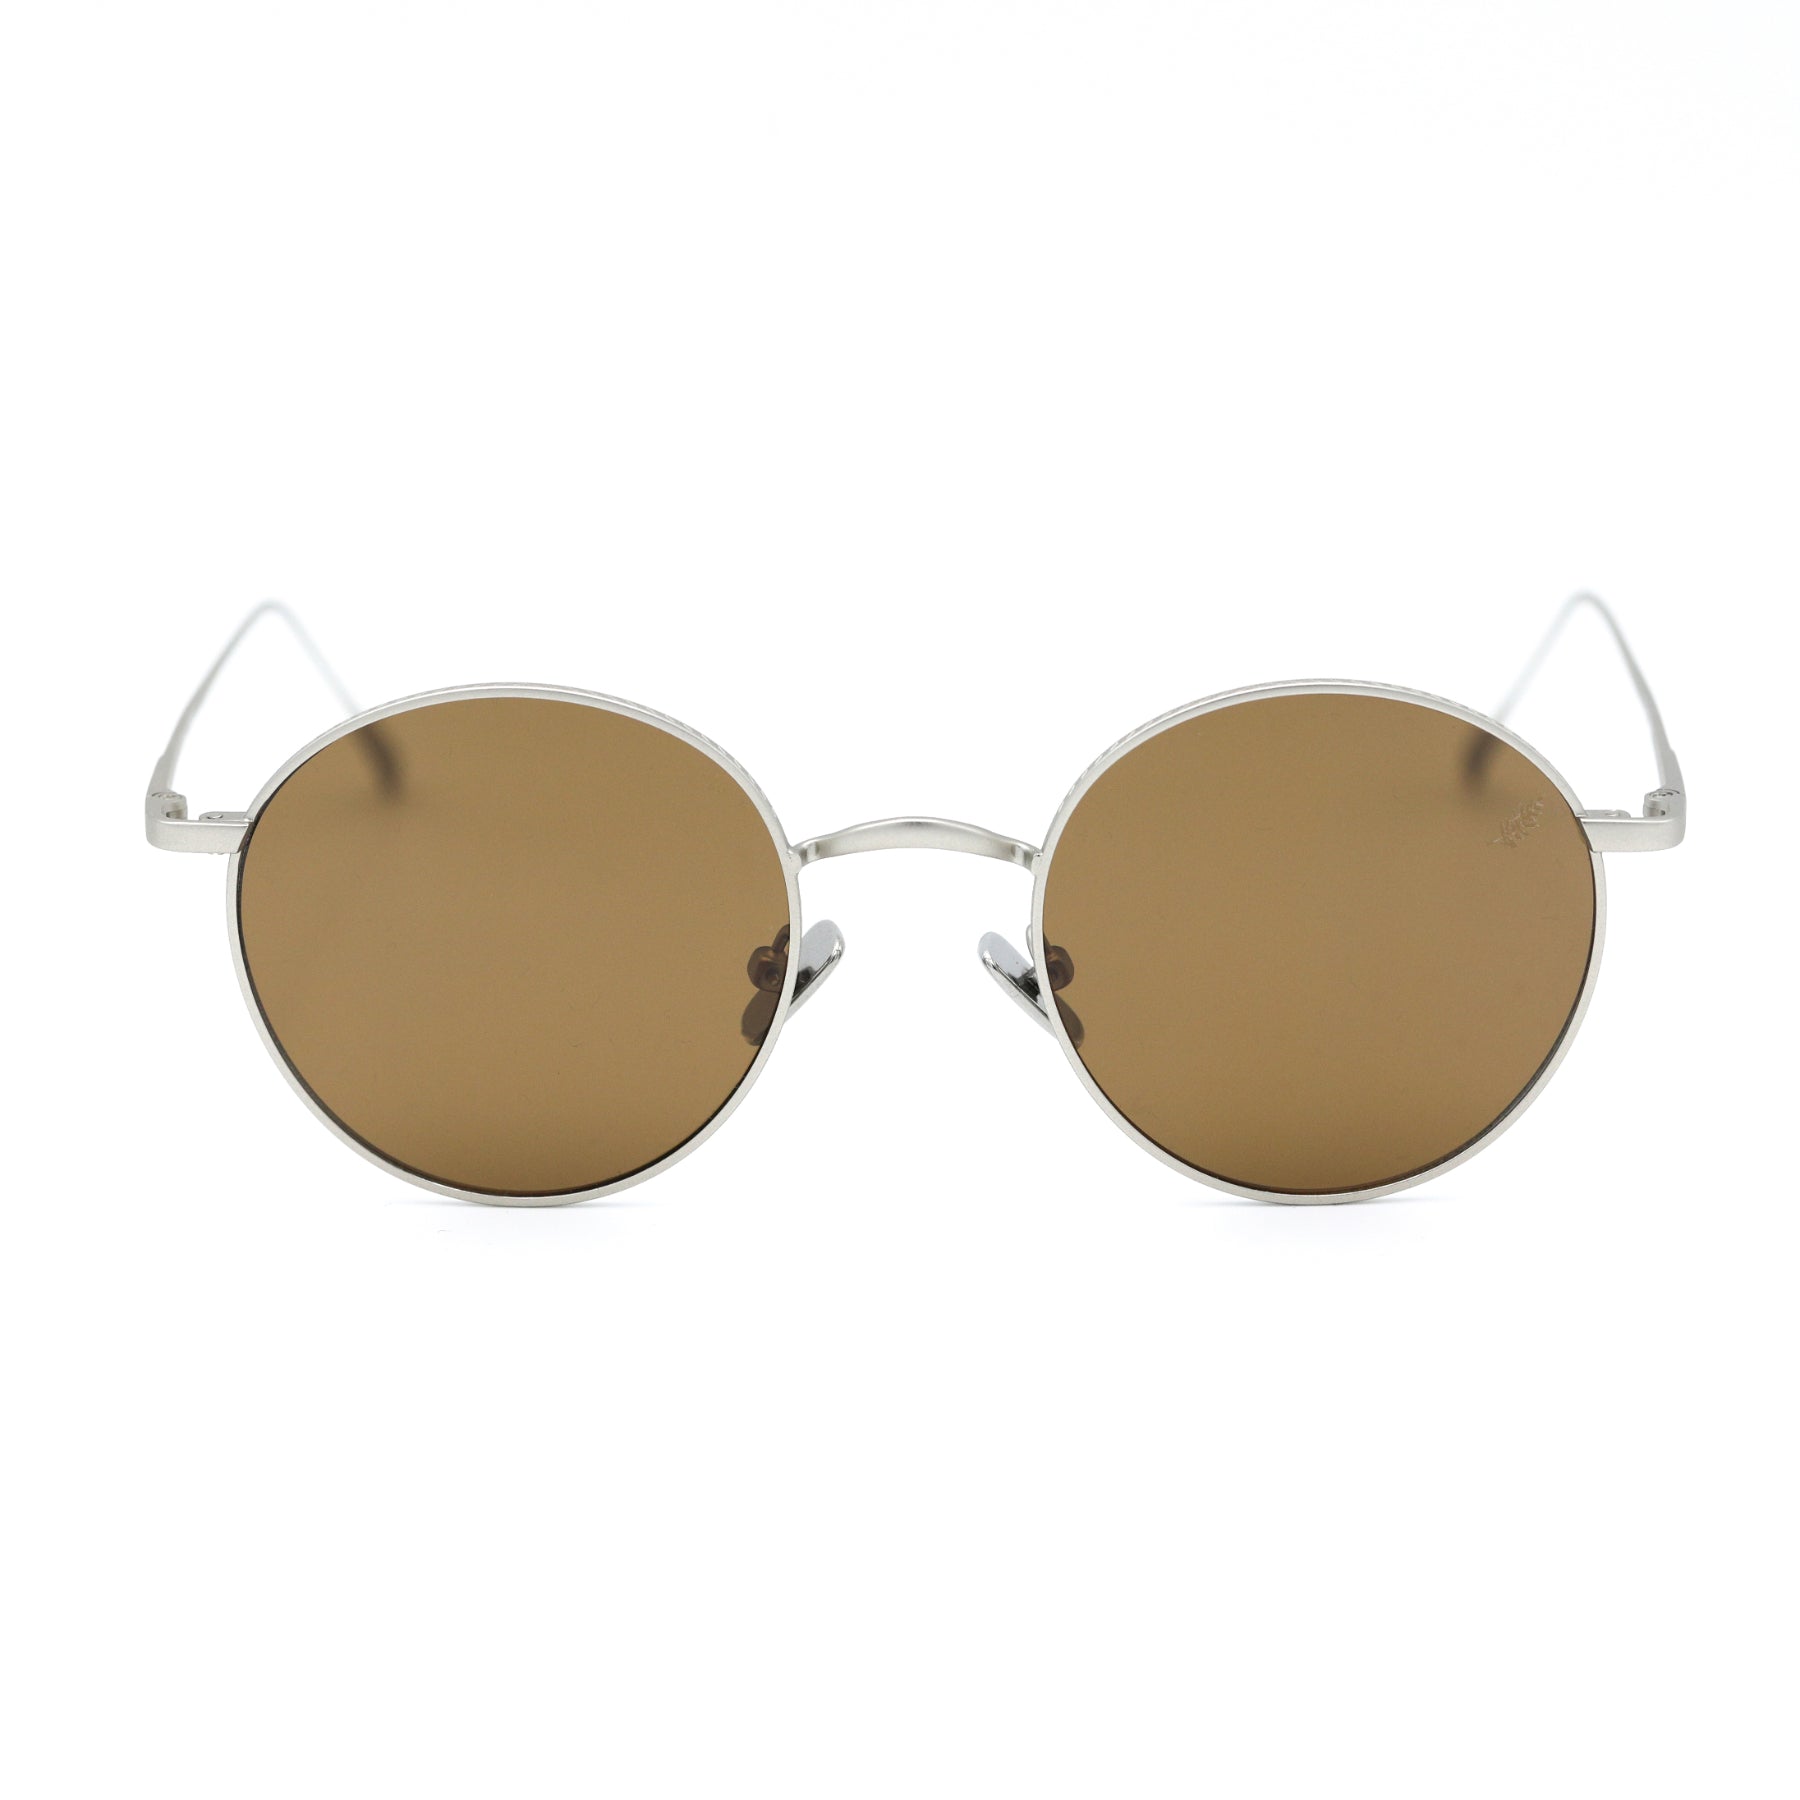 Goggles Sunglasses - Chris Haris